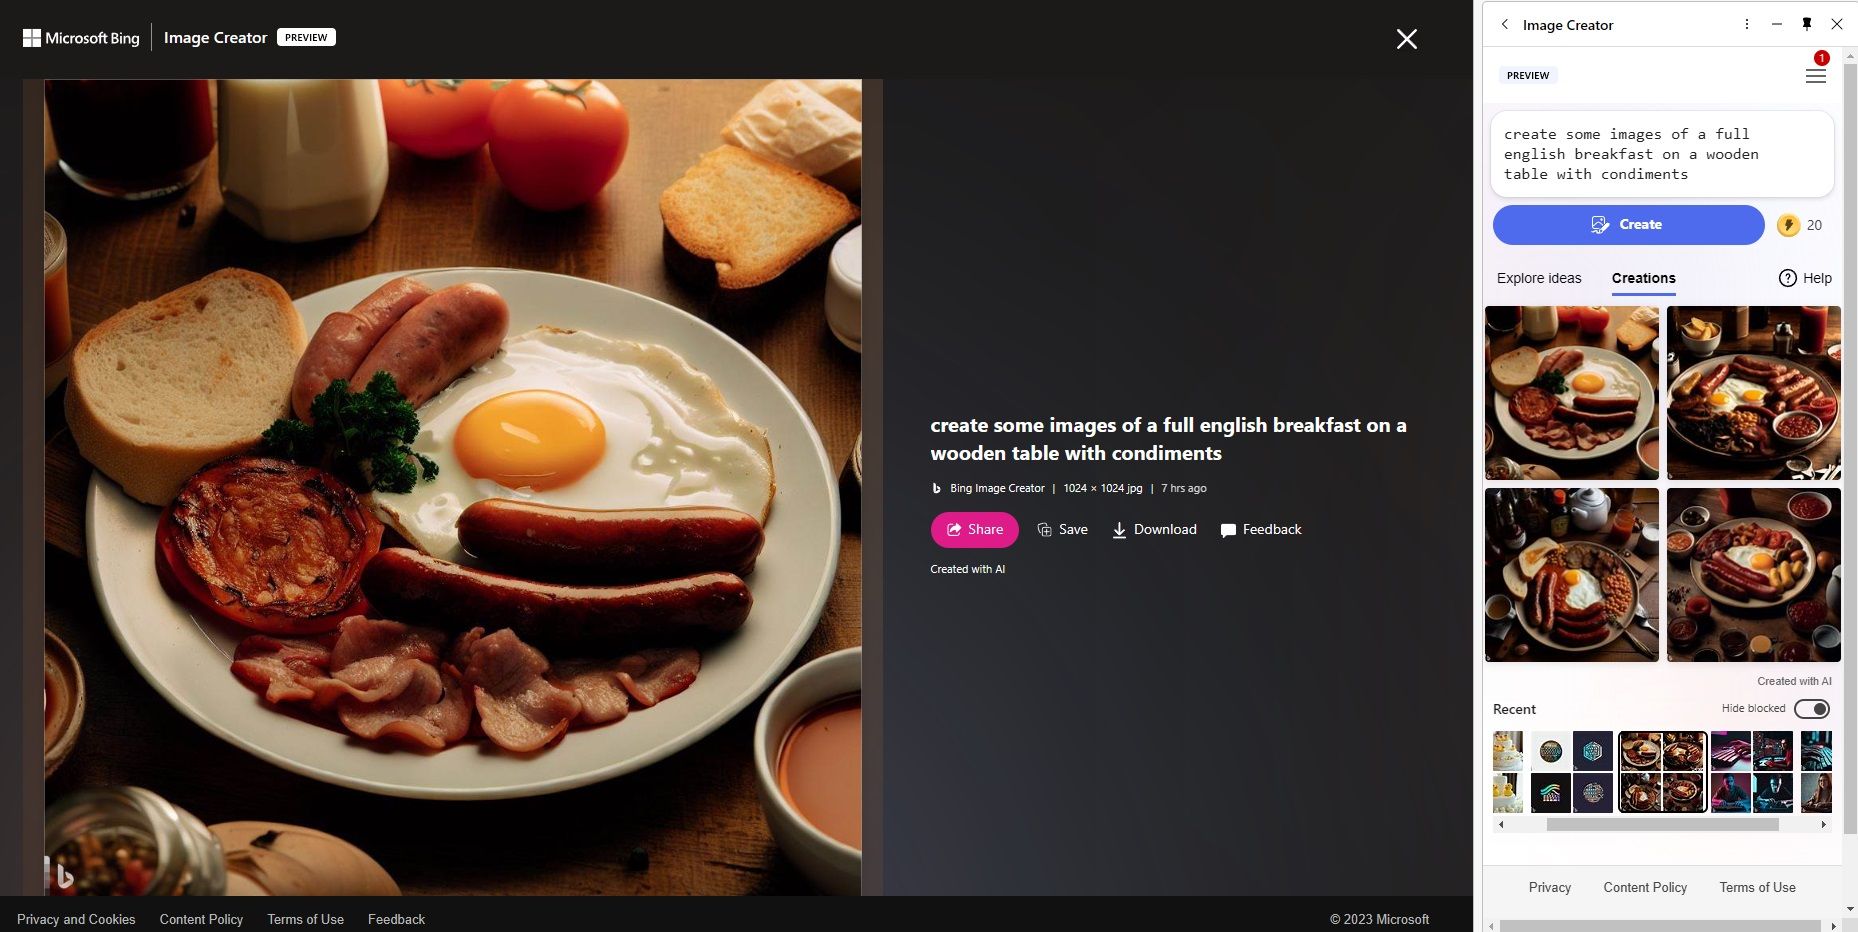 microsoft bing image creator maret 2023 full english breakfast